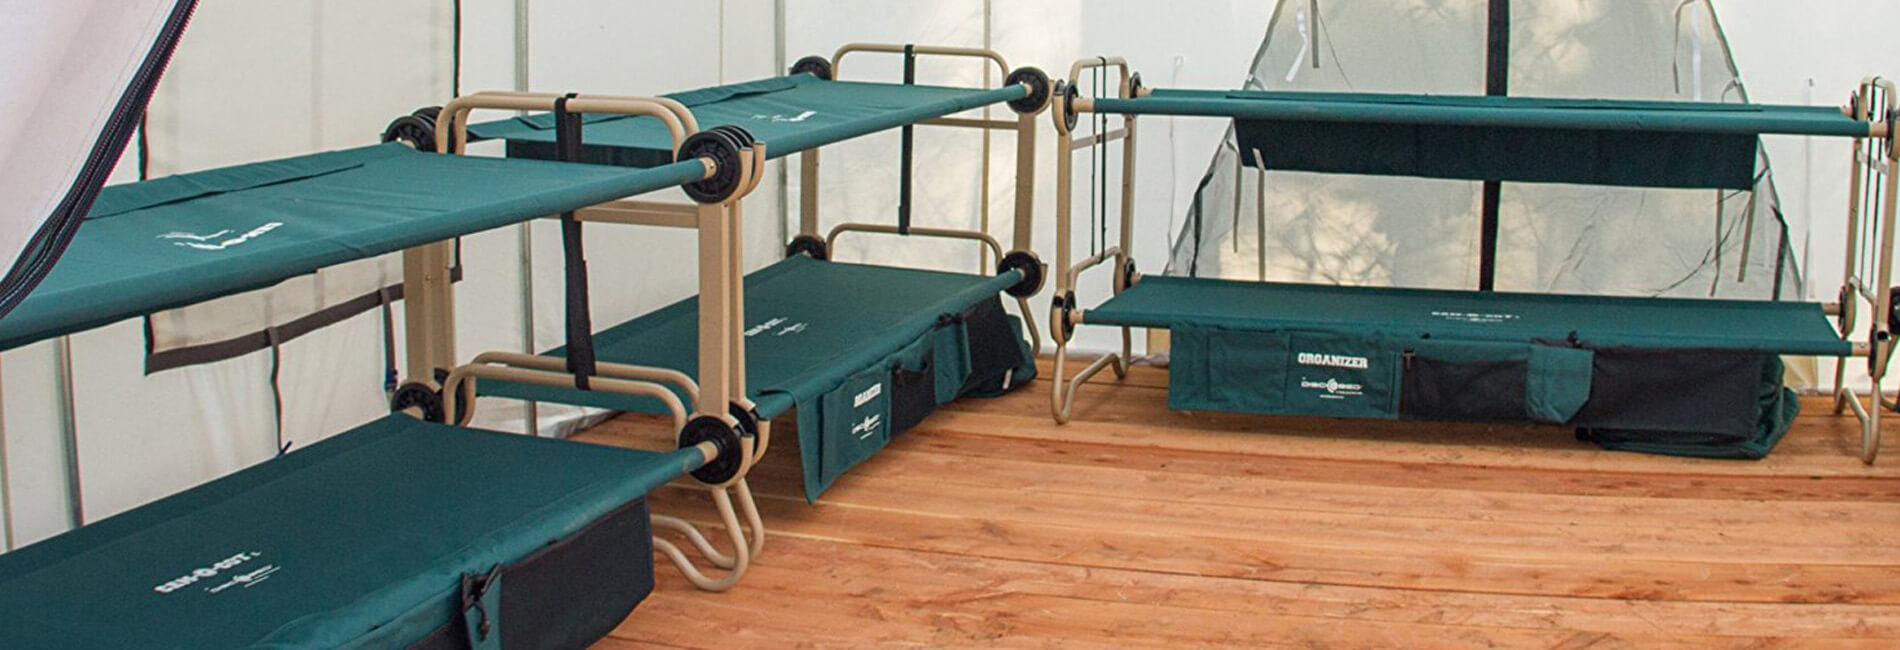 bunk stretcher beds